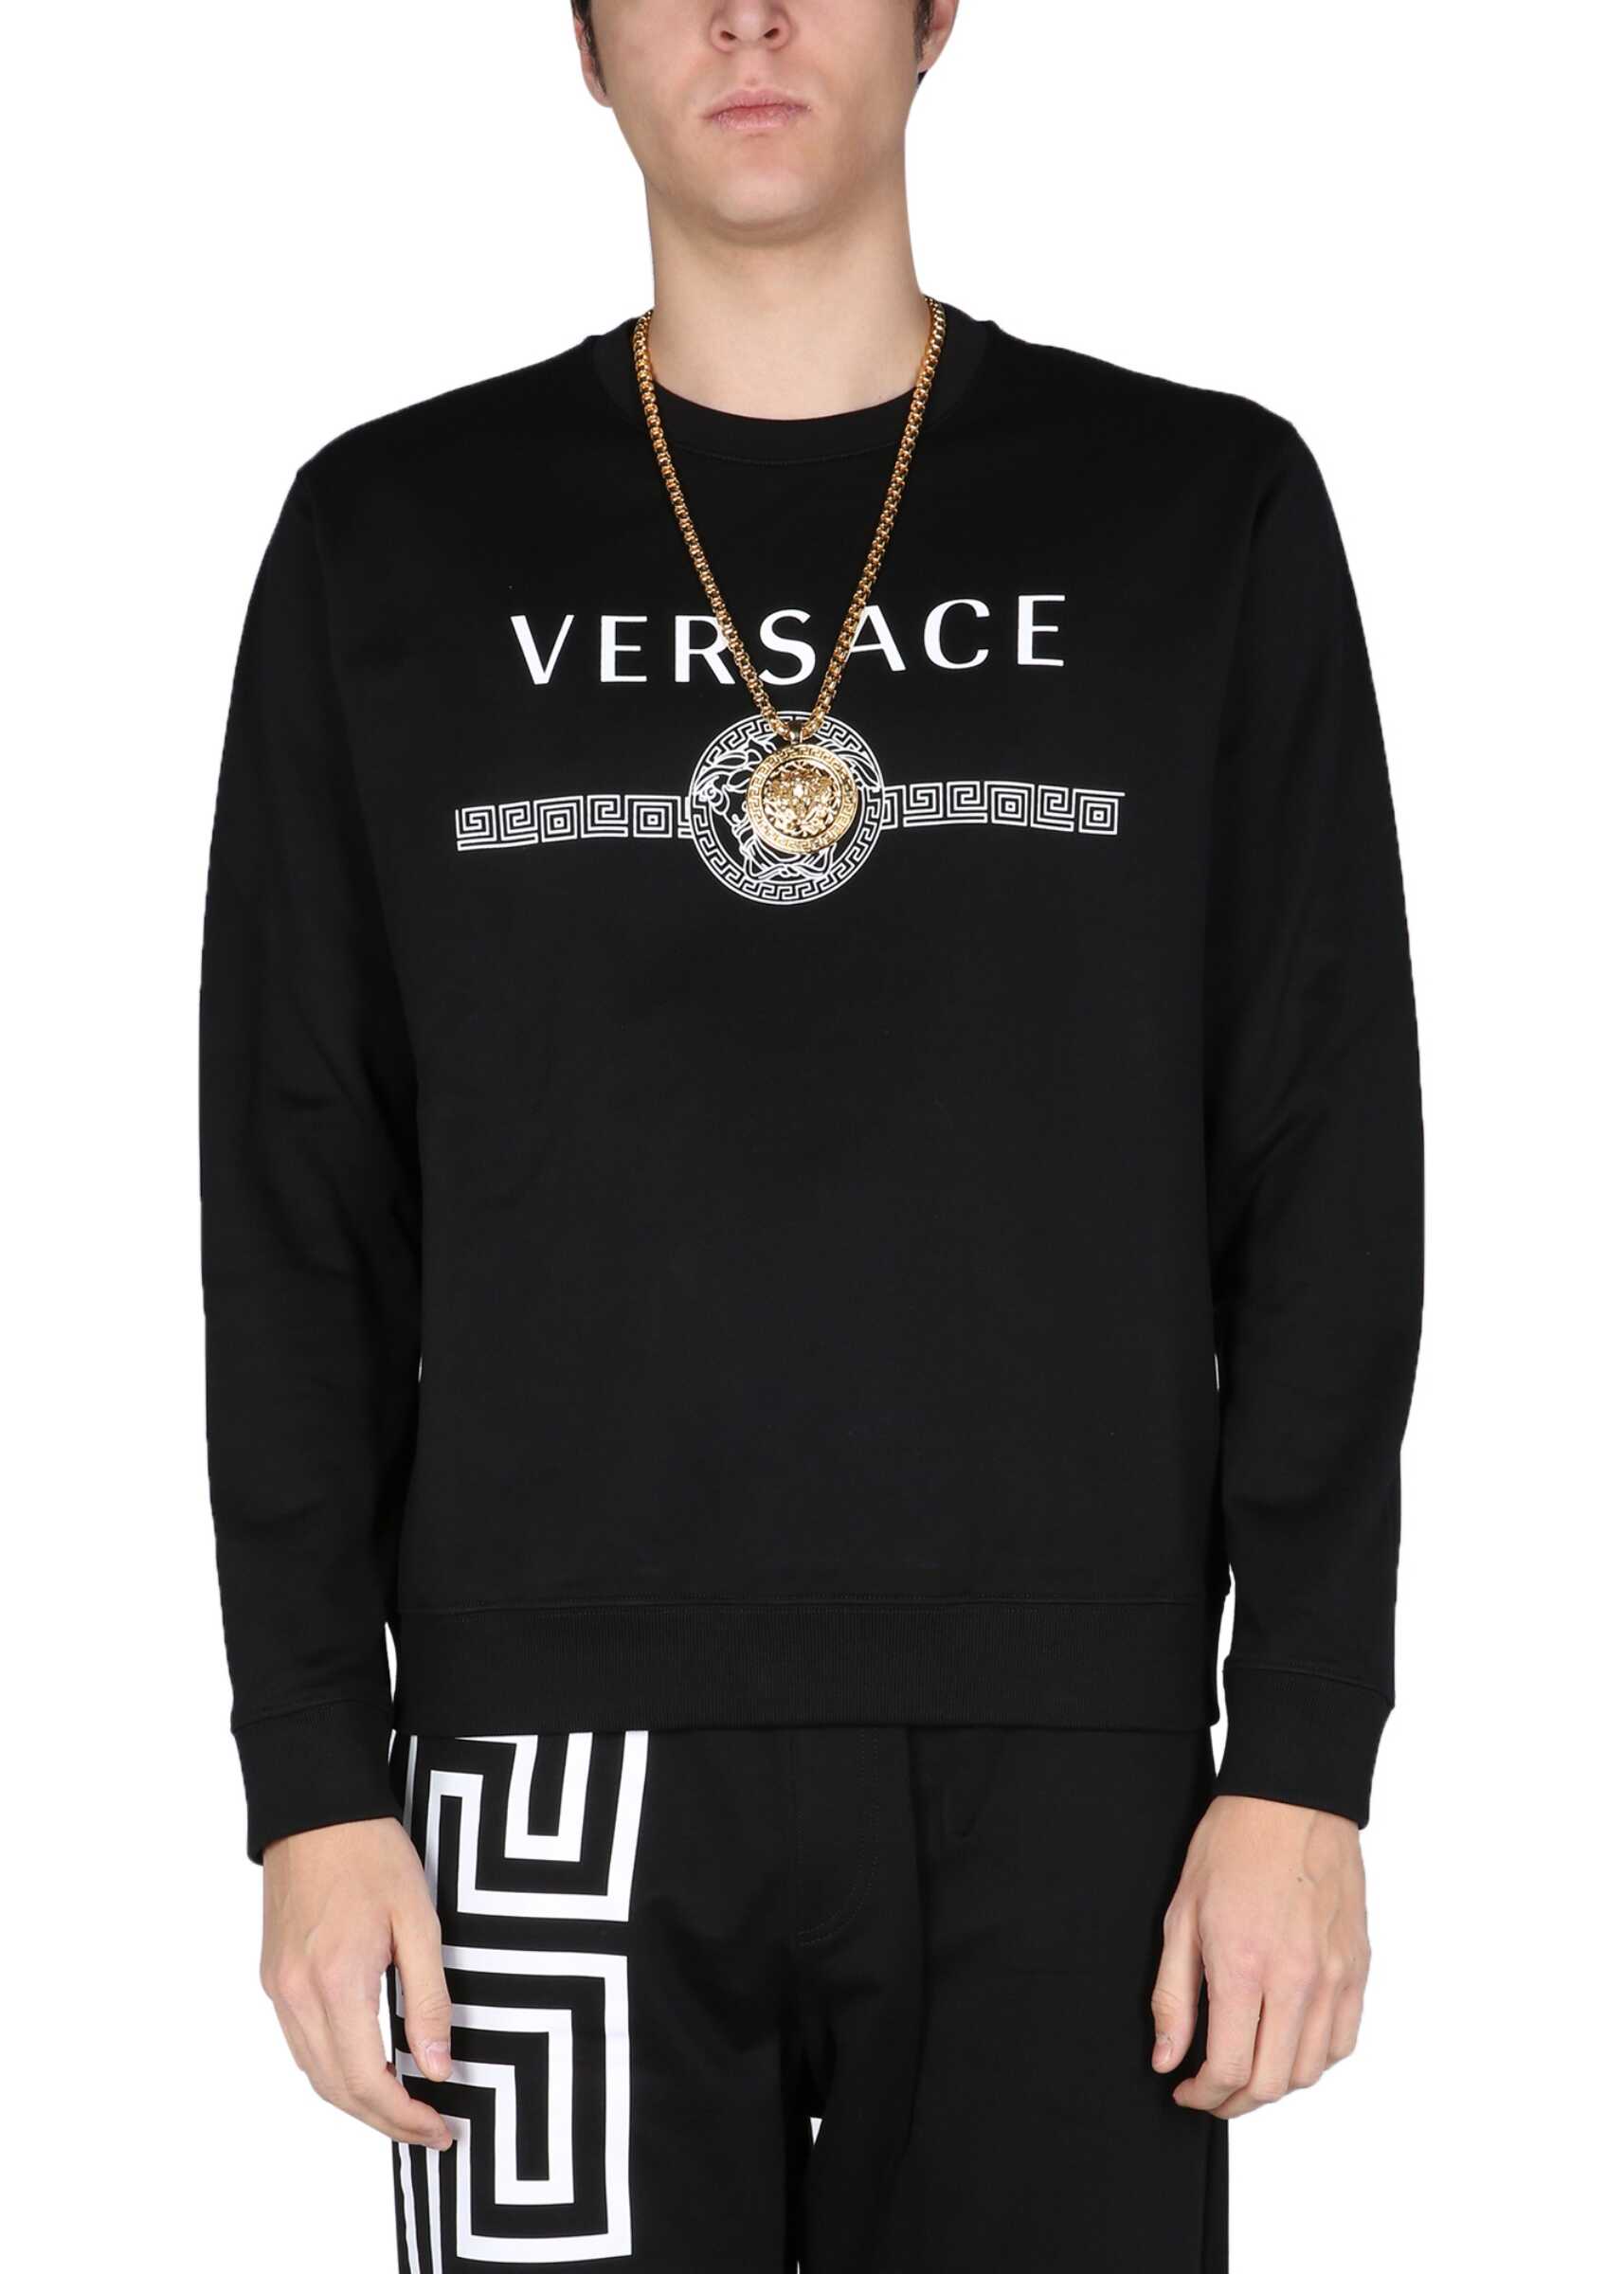 Versace Sweatshirt With Greek And Medusa Print A87574_A231242A1008 BLACK image0